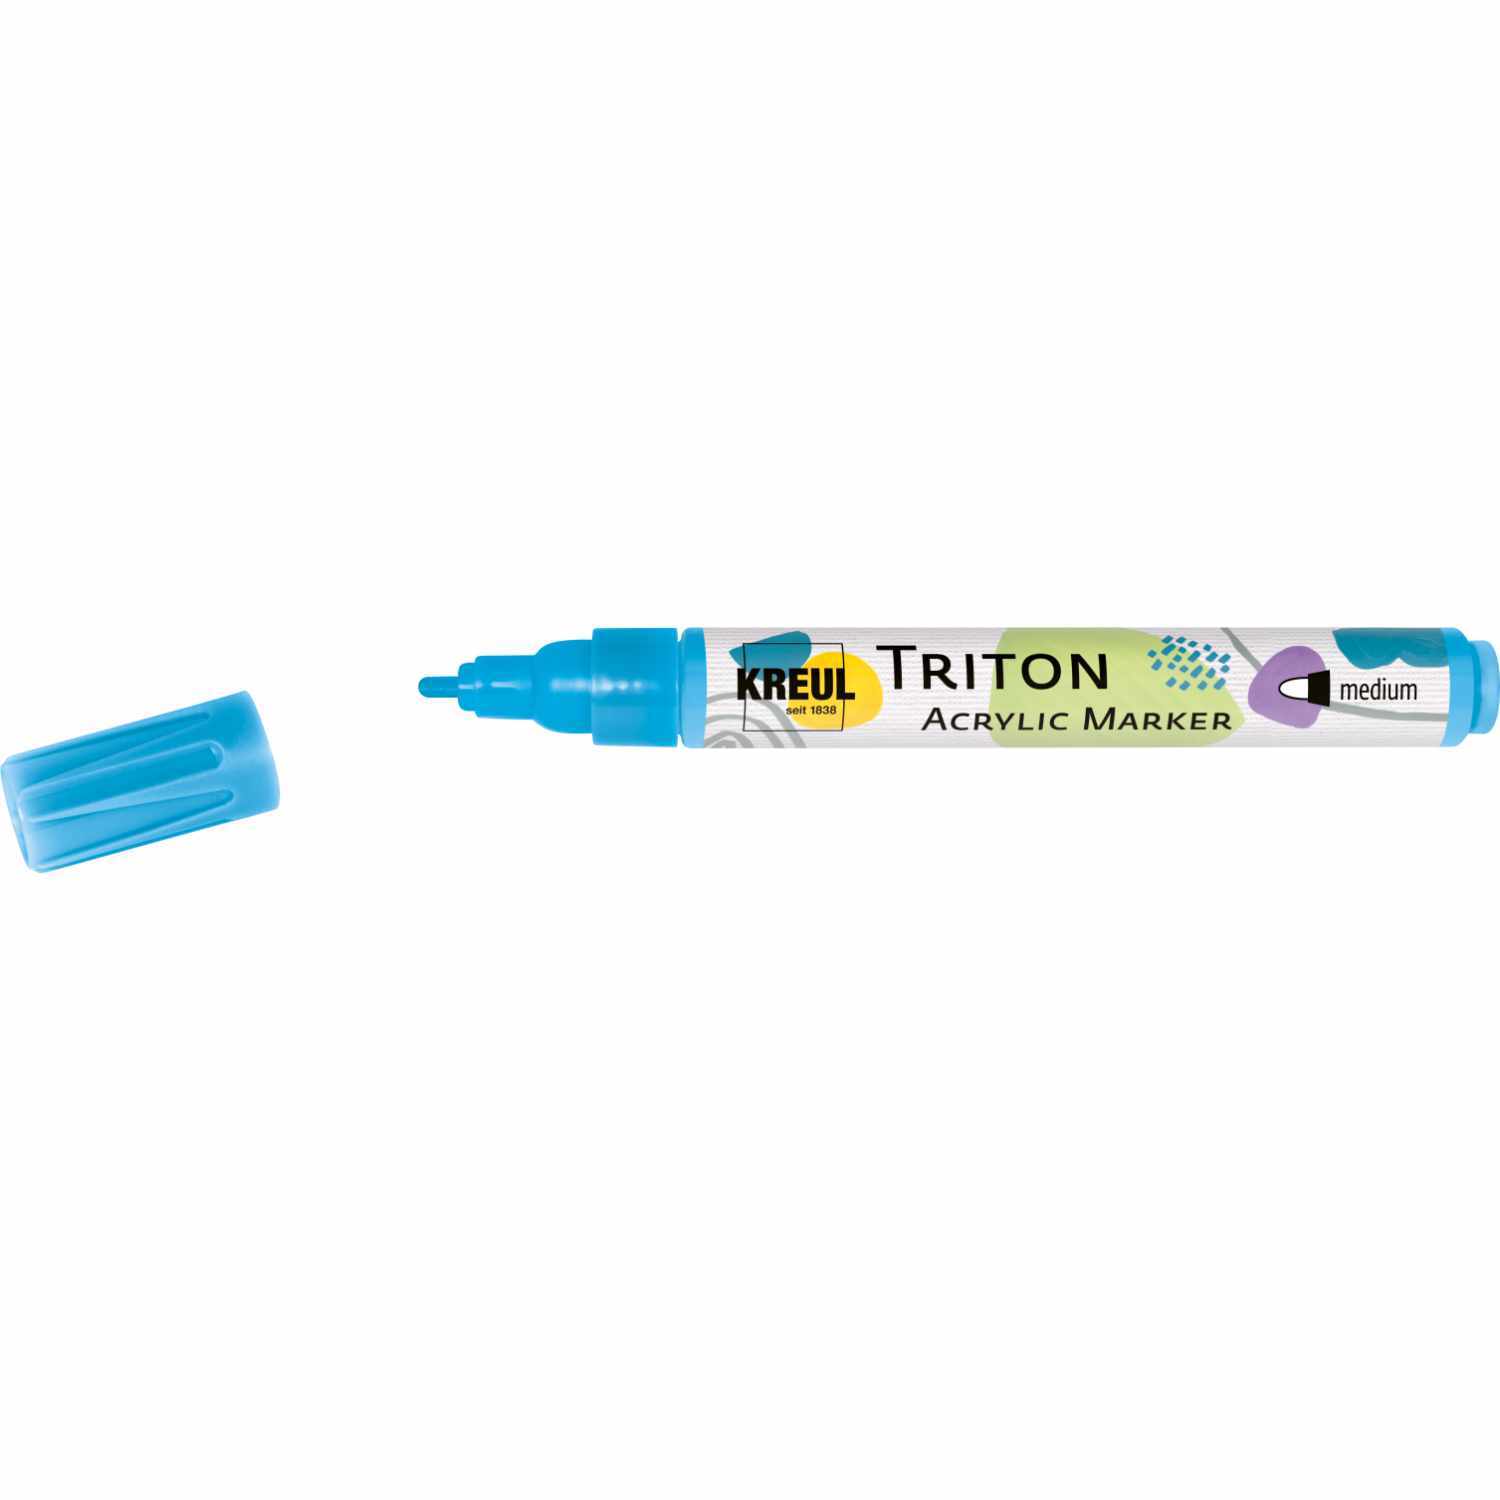 Triton Acrylic Marker medium 1-3mm